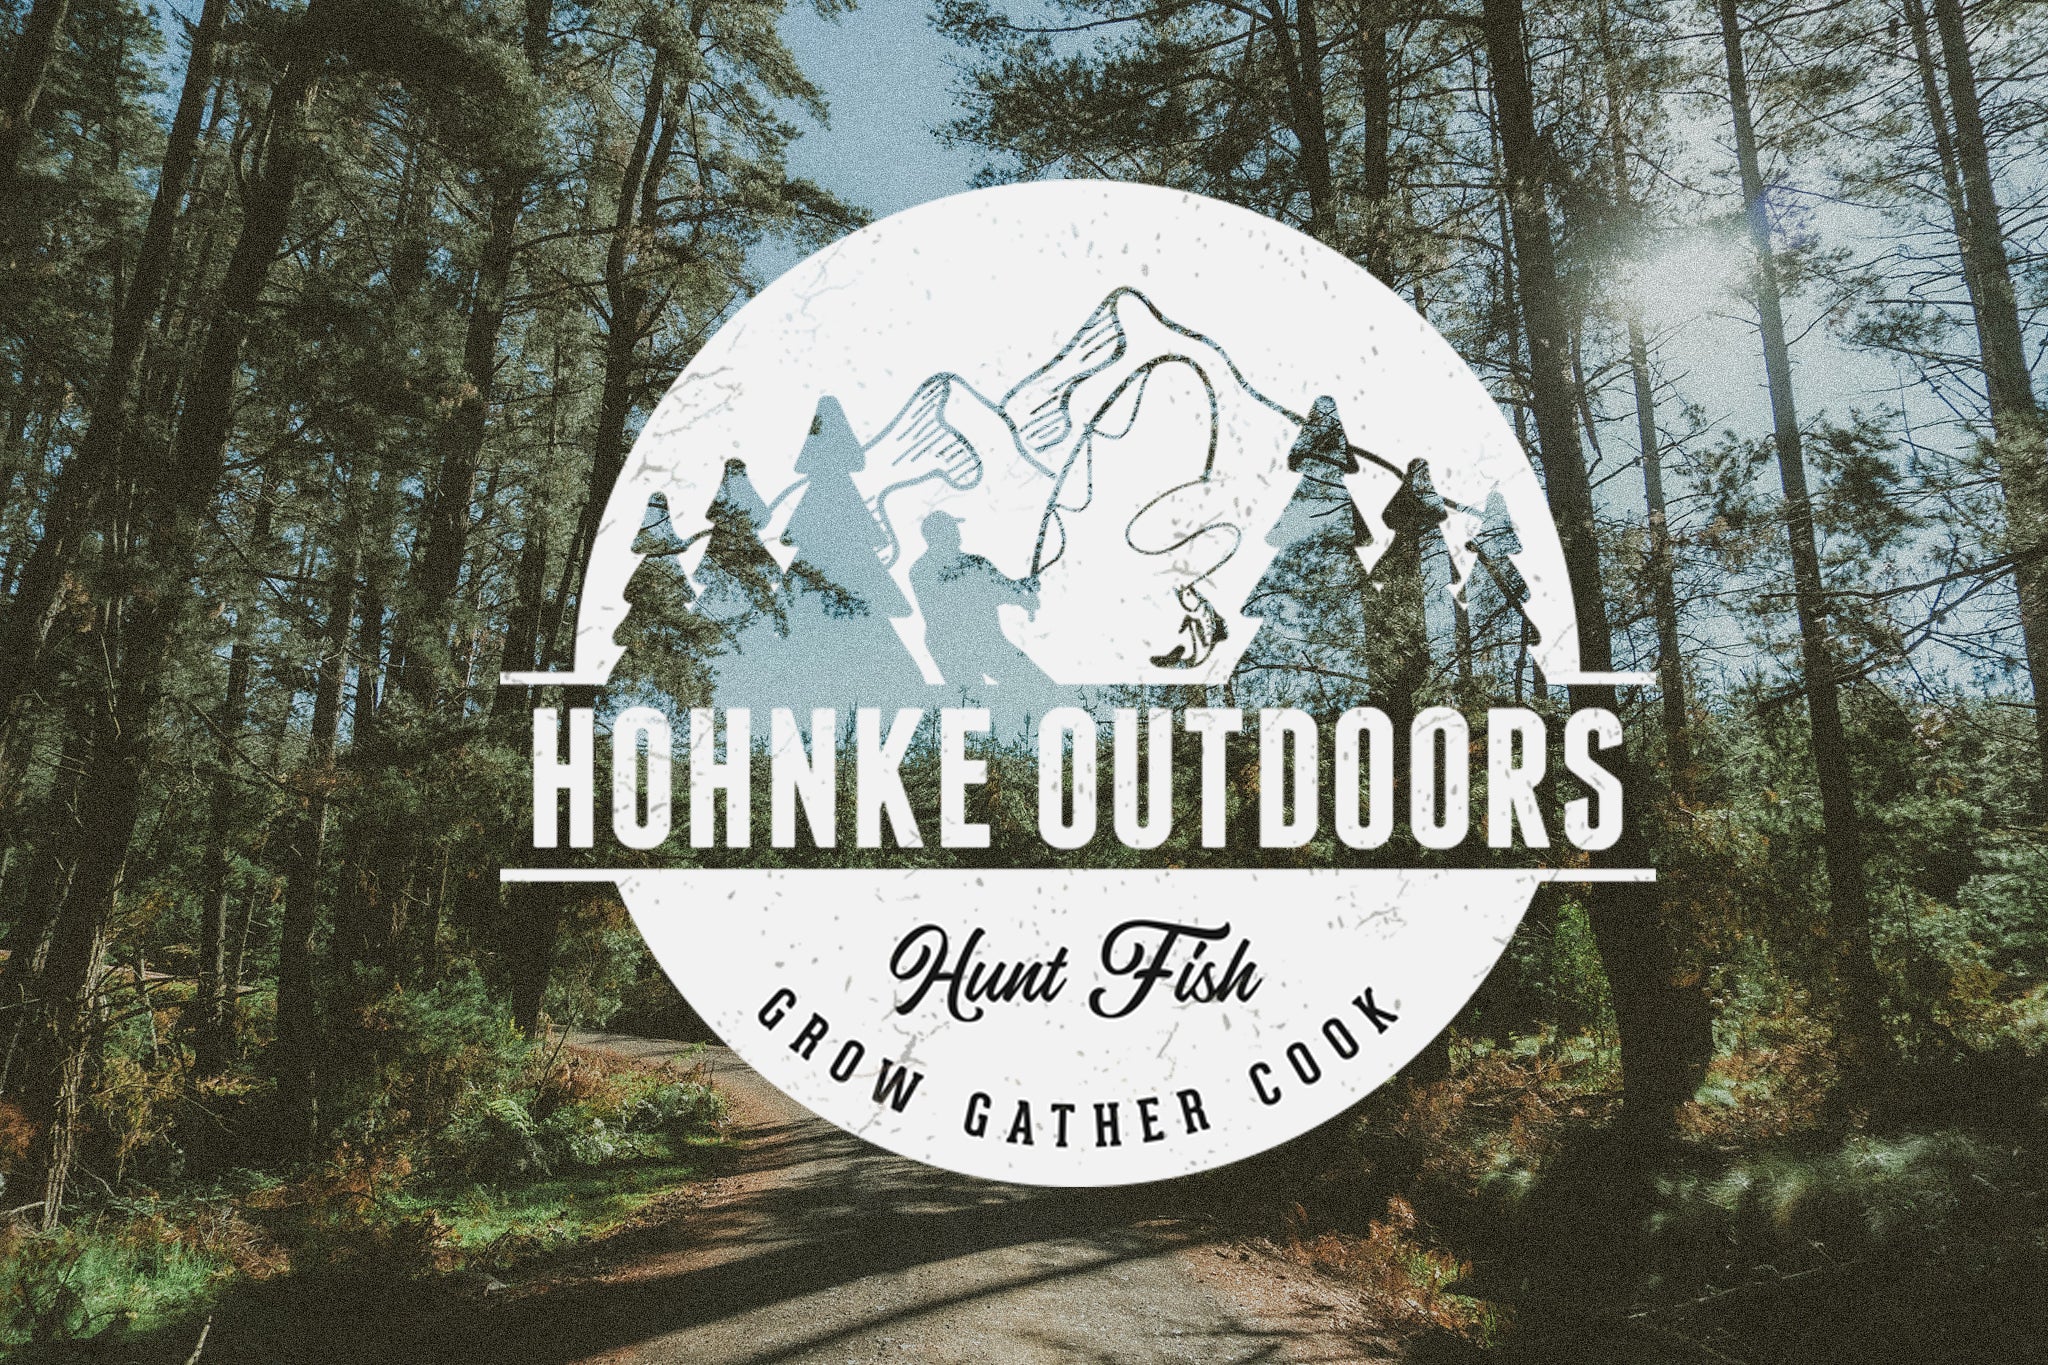 Hohnke Outdoors